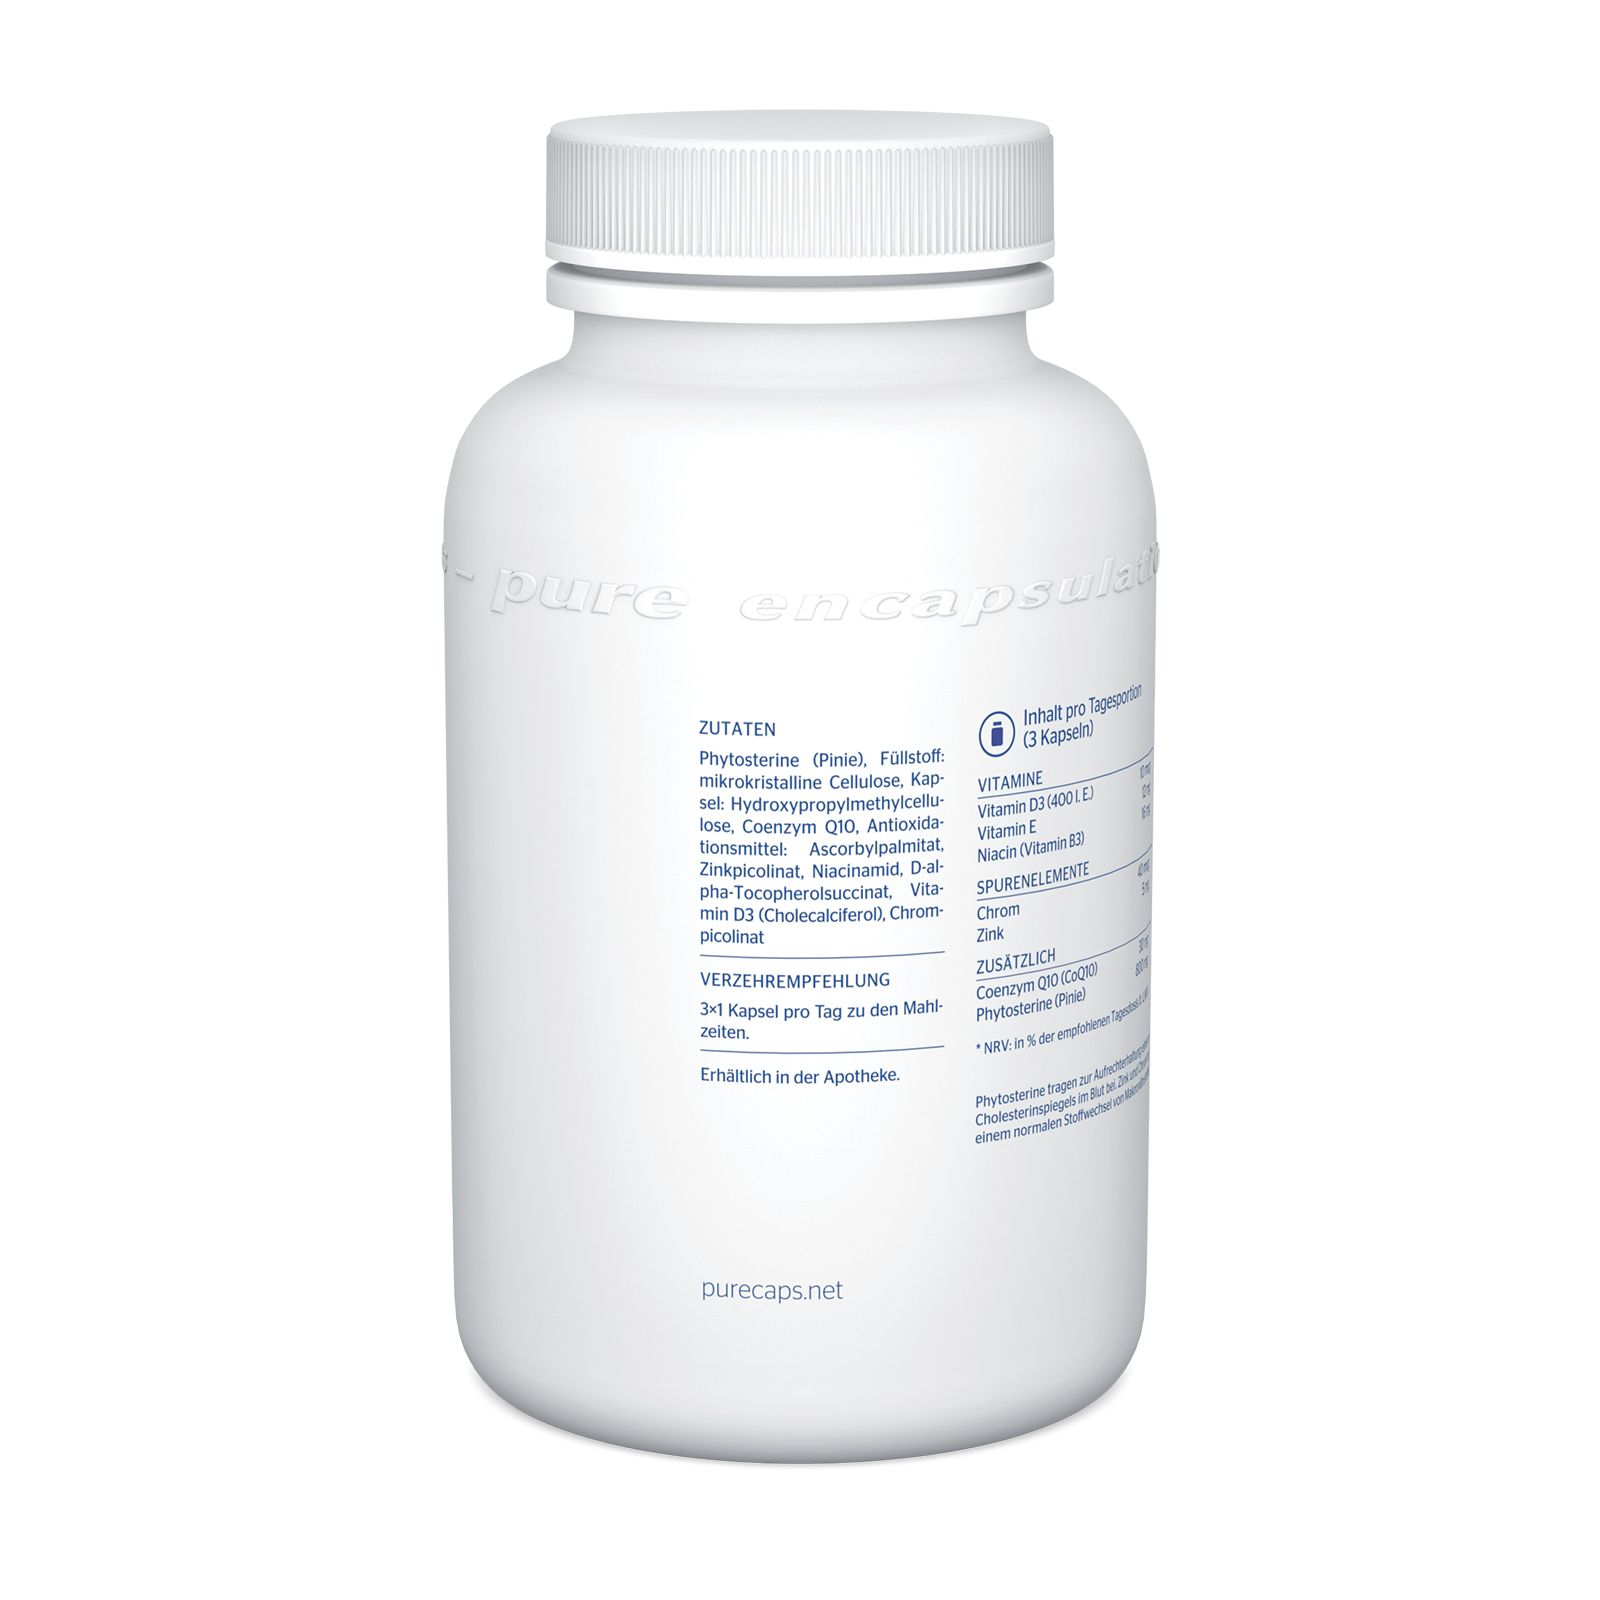 Pure Encapsulations® Lipid Aktiv